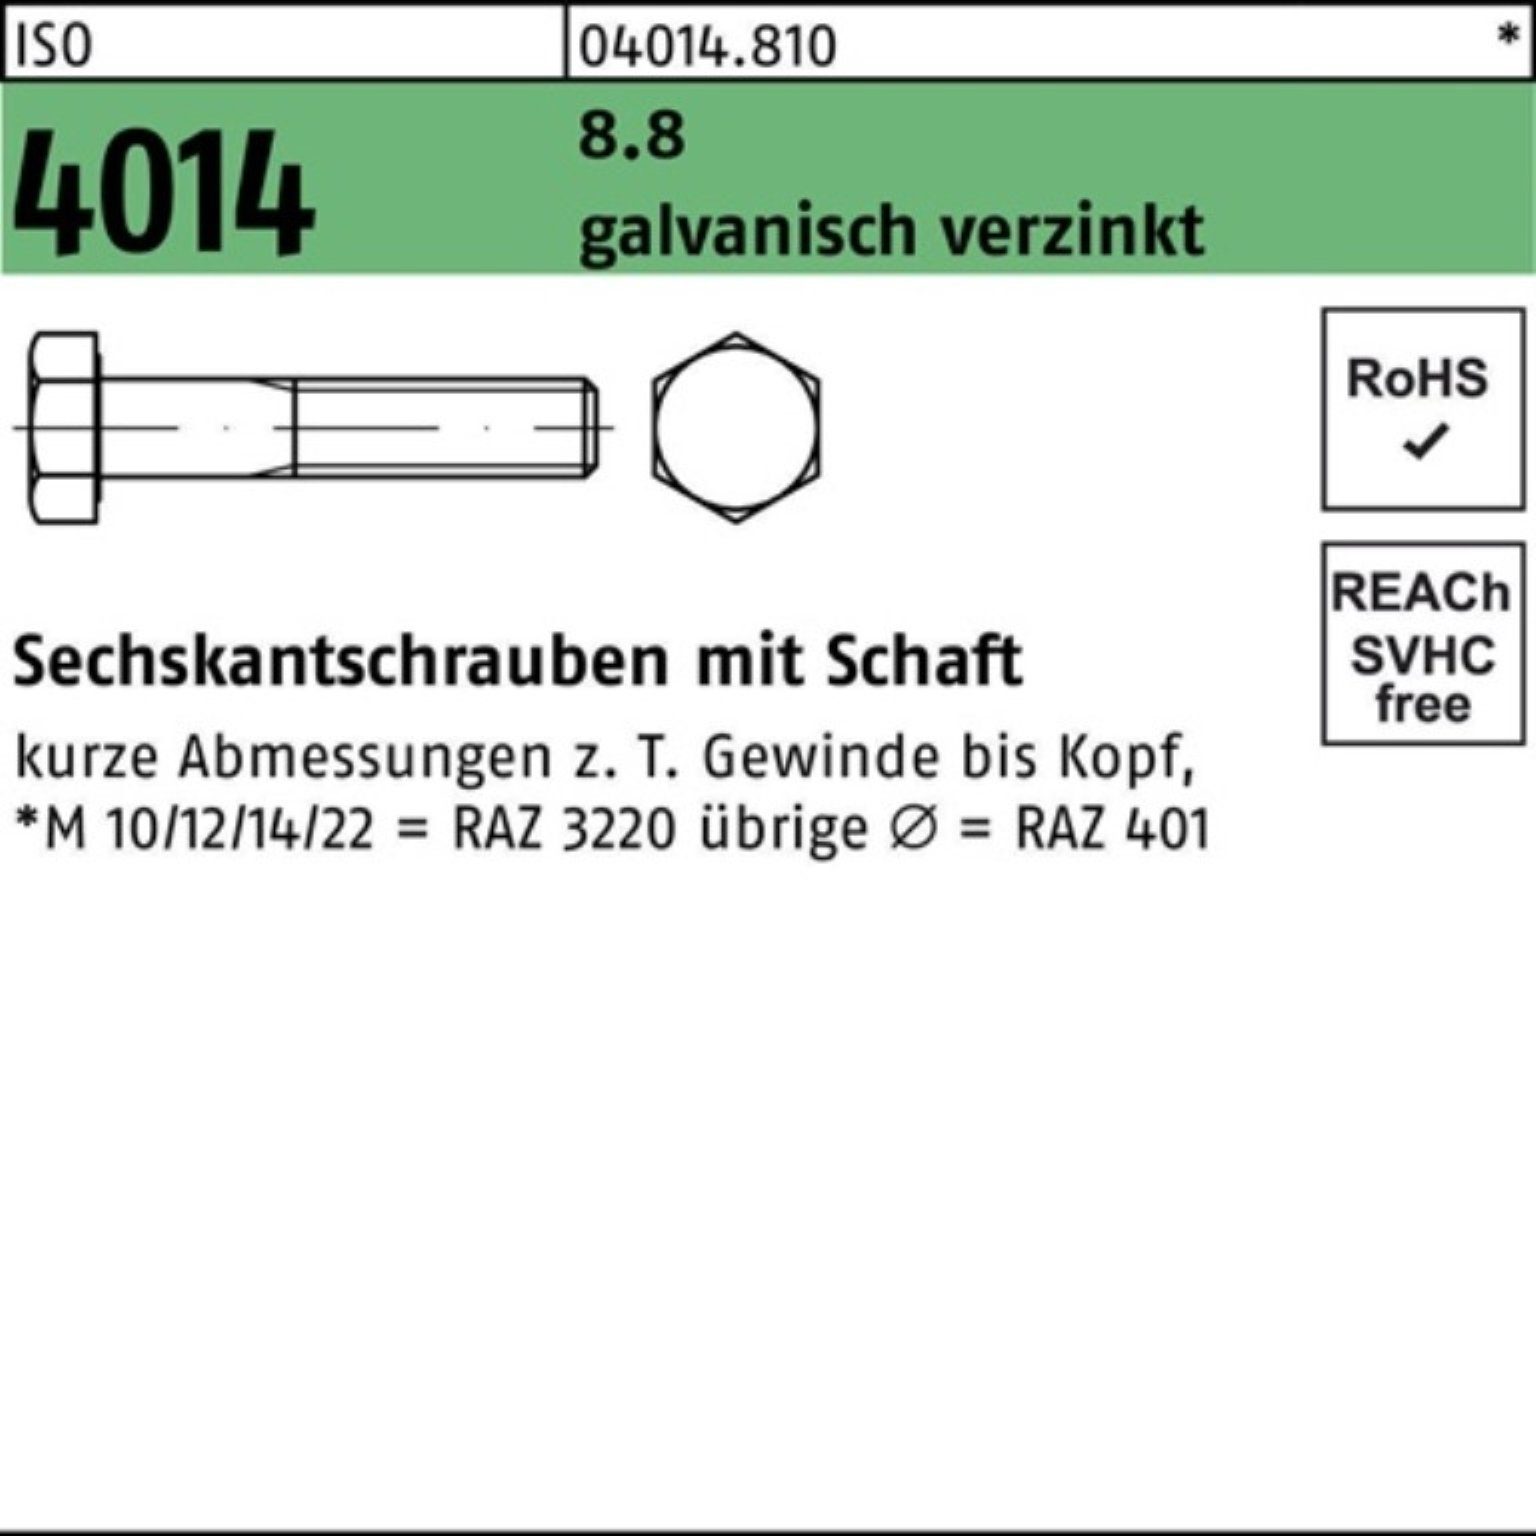 Bufab Sechskantschraube 100er Pack Sechskantschraube ISO 4014 Schaft M24x 430 8.8 galv.verz. 1 | Schrauben